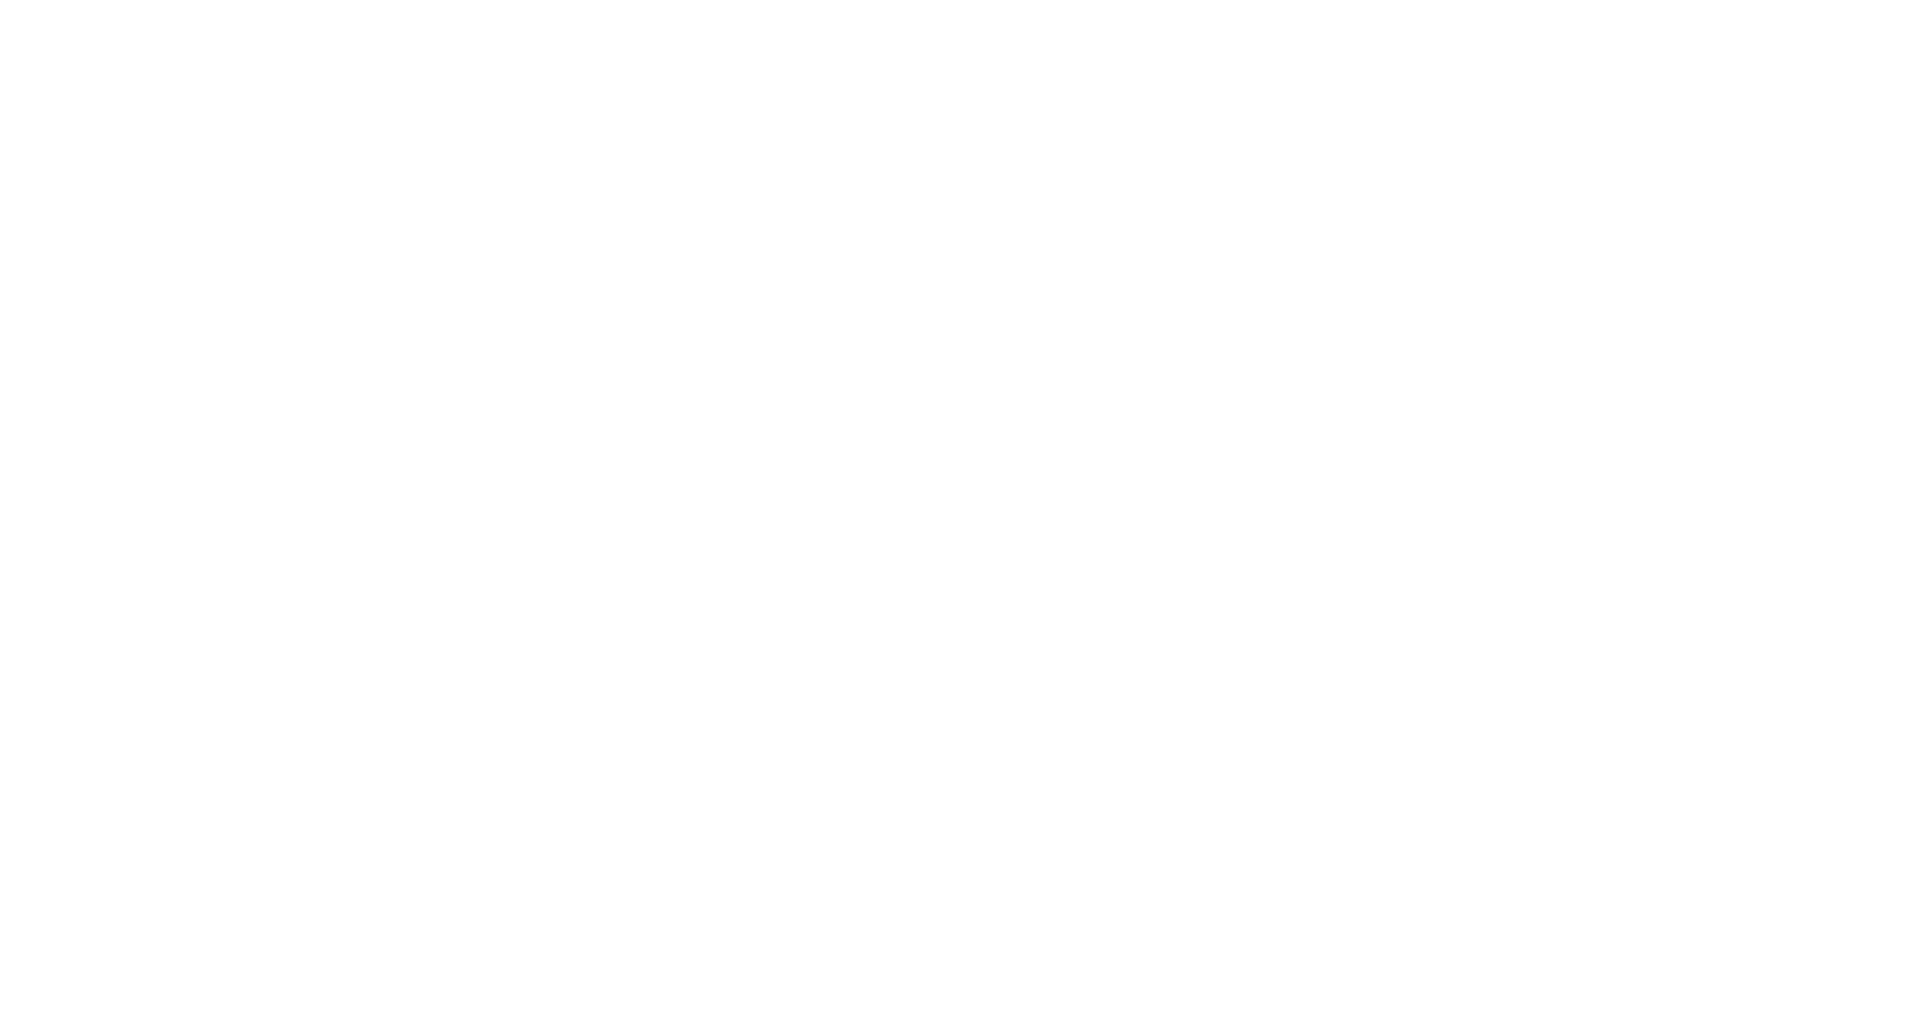 Rajam School of Violin